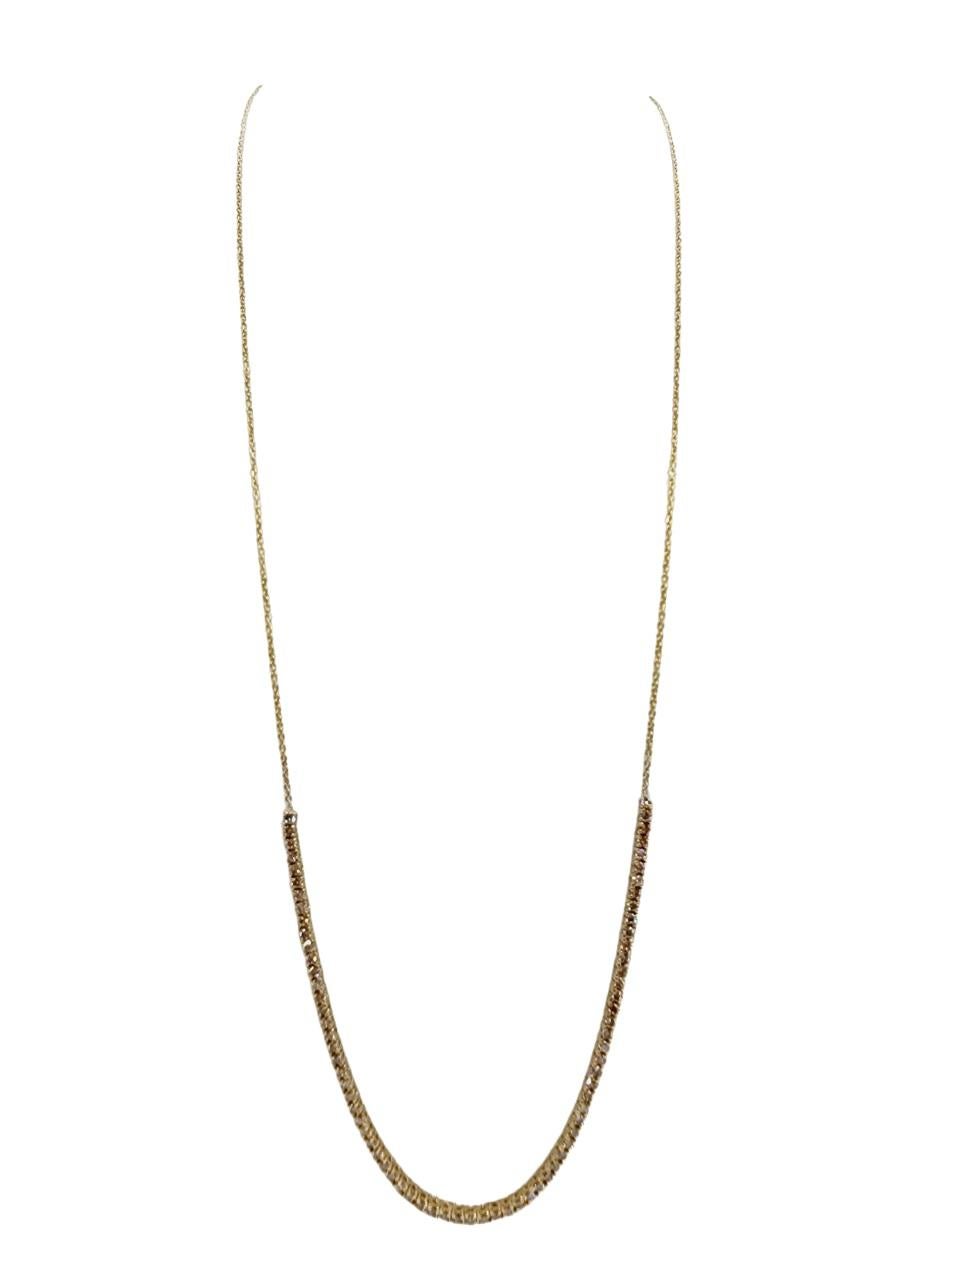 1.65 Carat Mini Diamond Necklace Chain 14 Karat Yellow Gold 16'' (Chaîne de collier en or jaune 14 carats) Neuf à Great Neck, NY